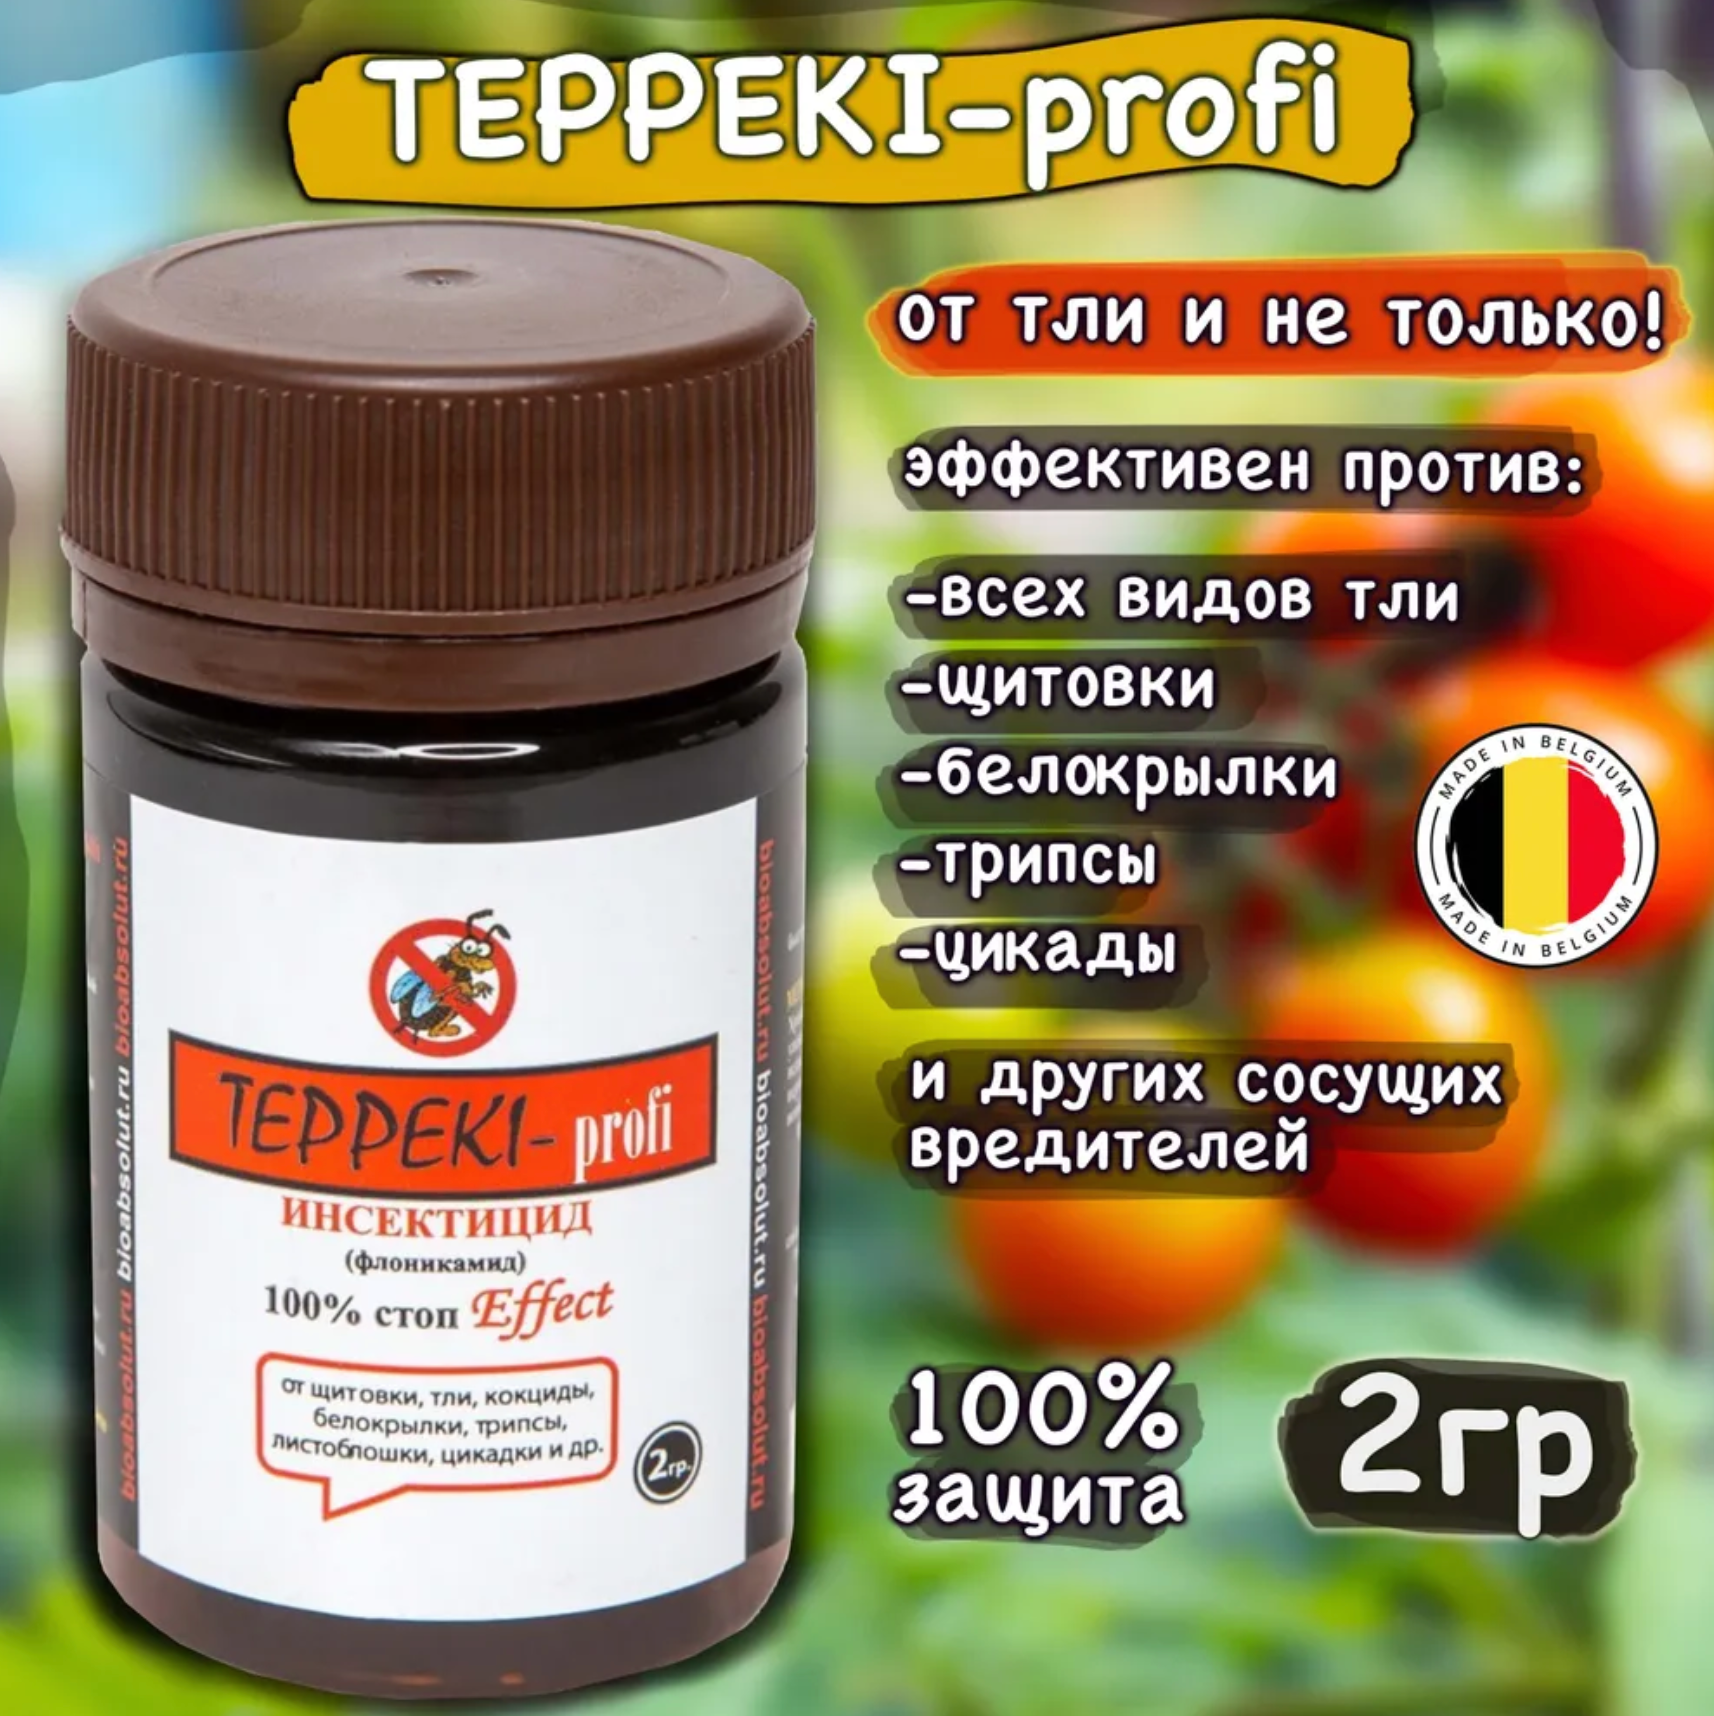 Теппеки TEPPEKI-profi препарат от всех видов тли, белокрылки и других вредителей, 2 гр - фотография № 1